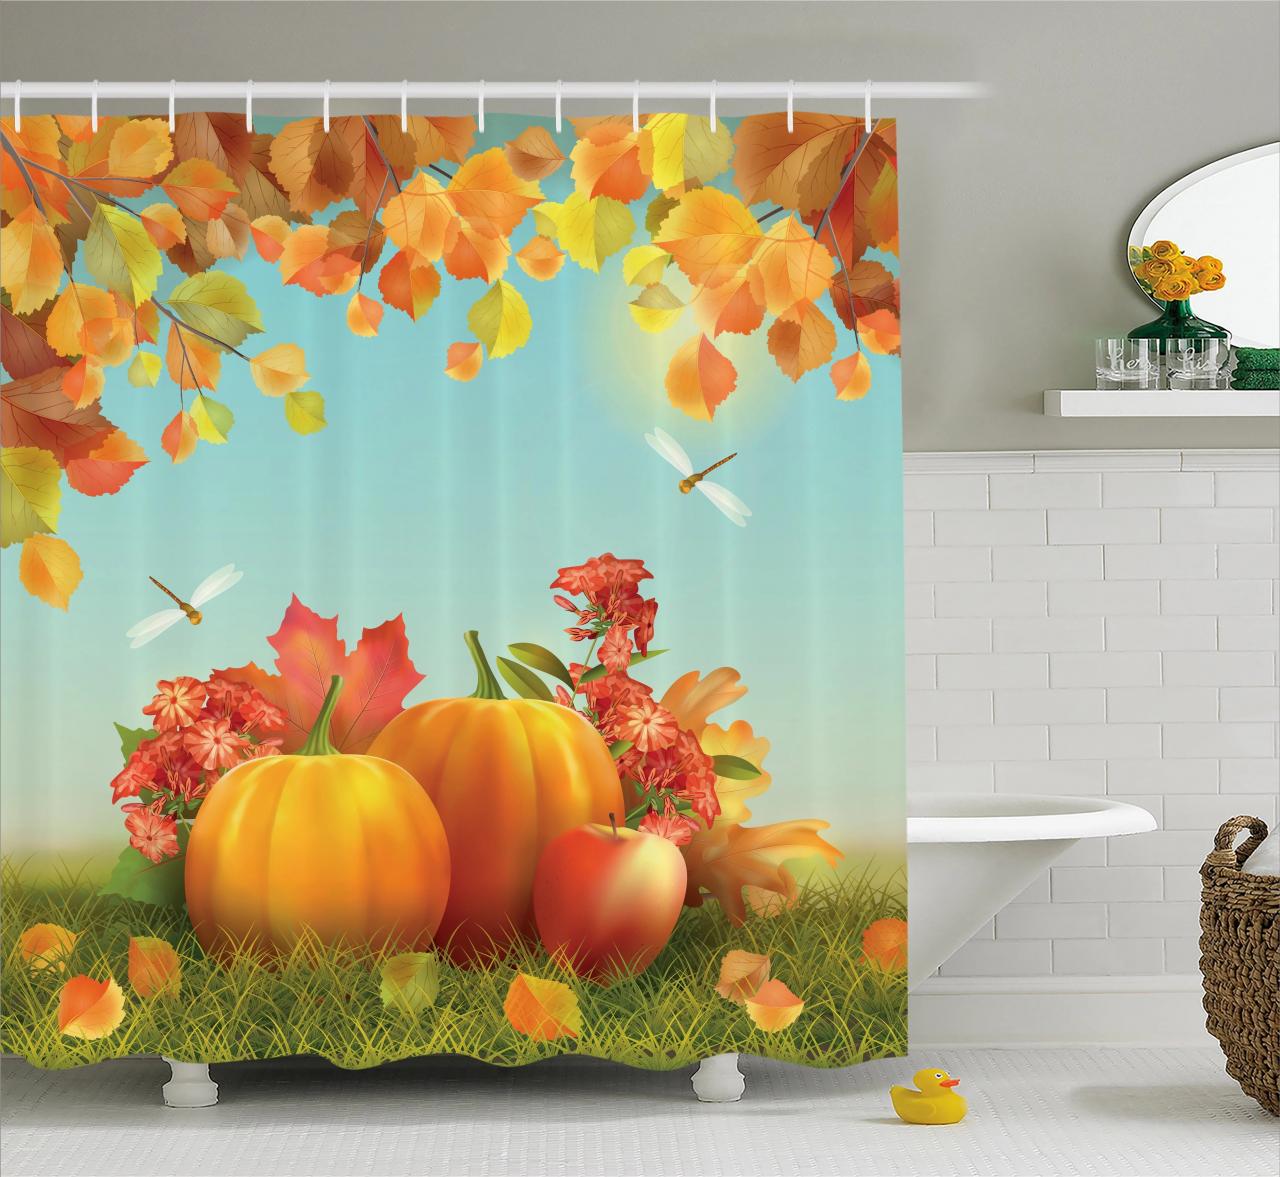 Harvest Shower Curtain, Fall Season Yield Thanksgiving Image Fallen